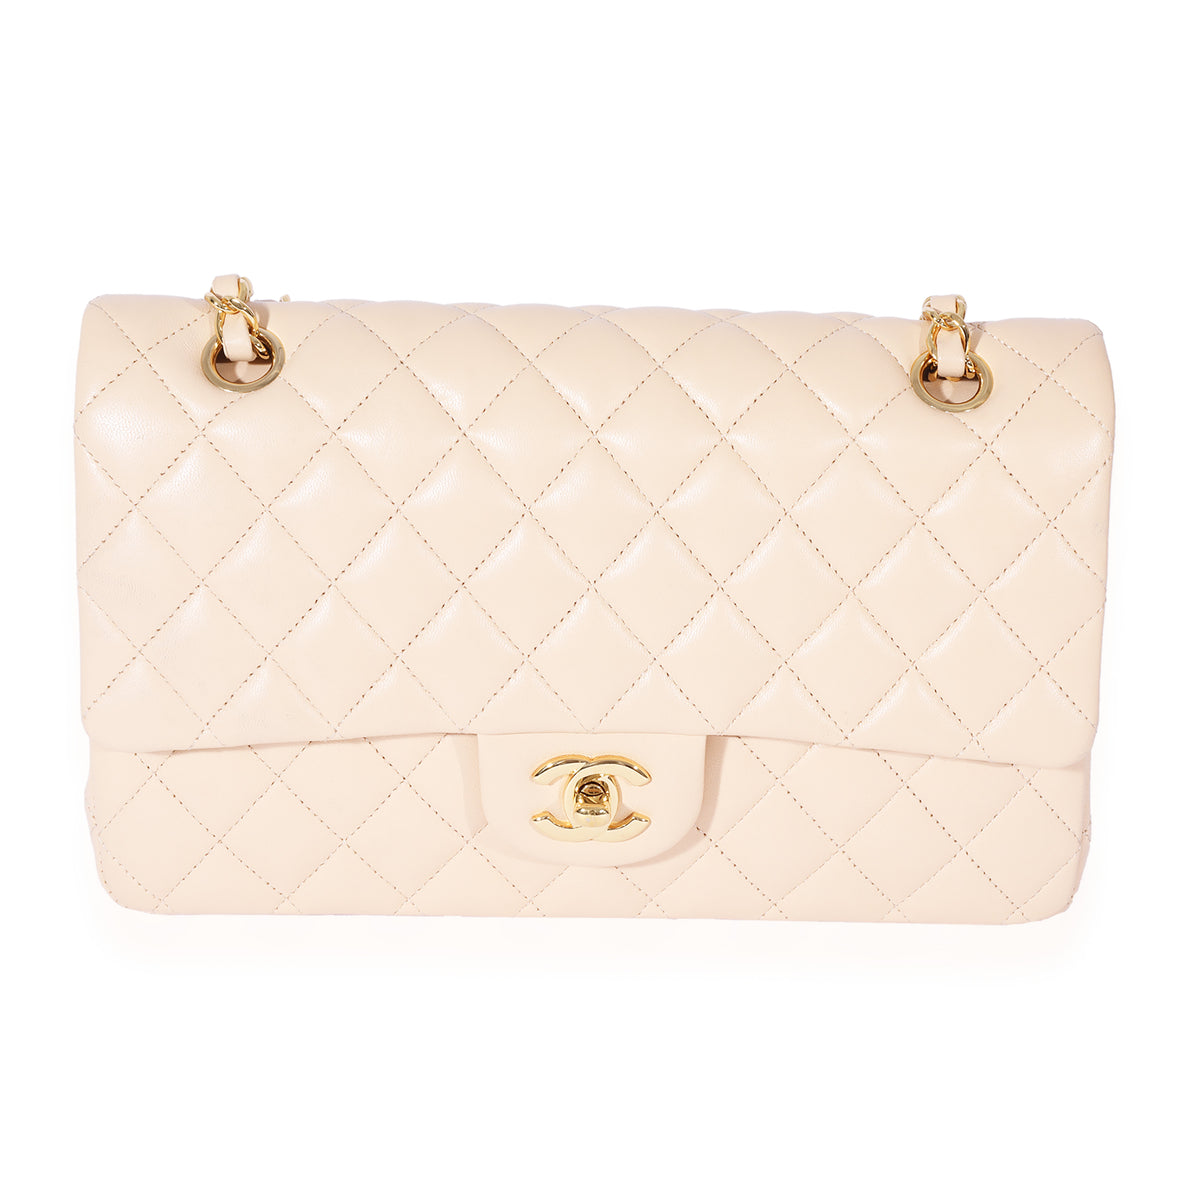 Chanel Beige Lambskin Medium Classic Flap Bag